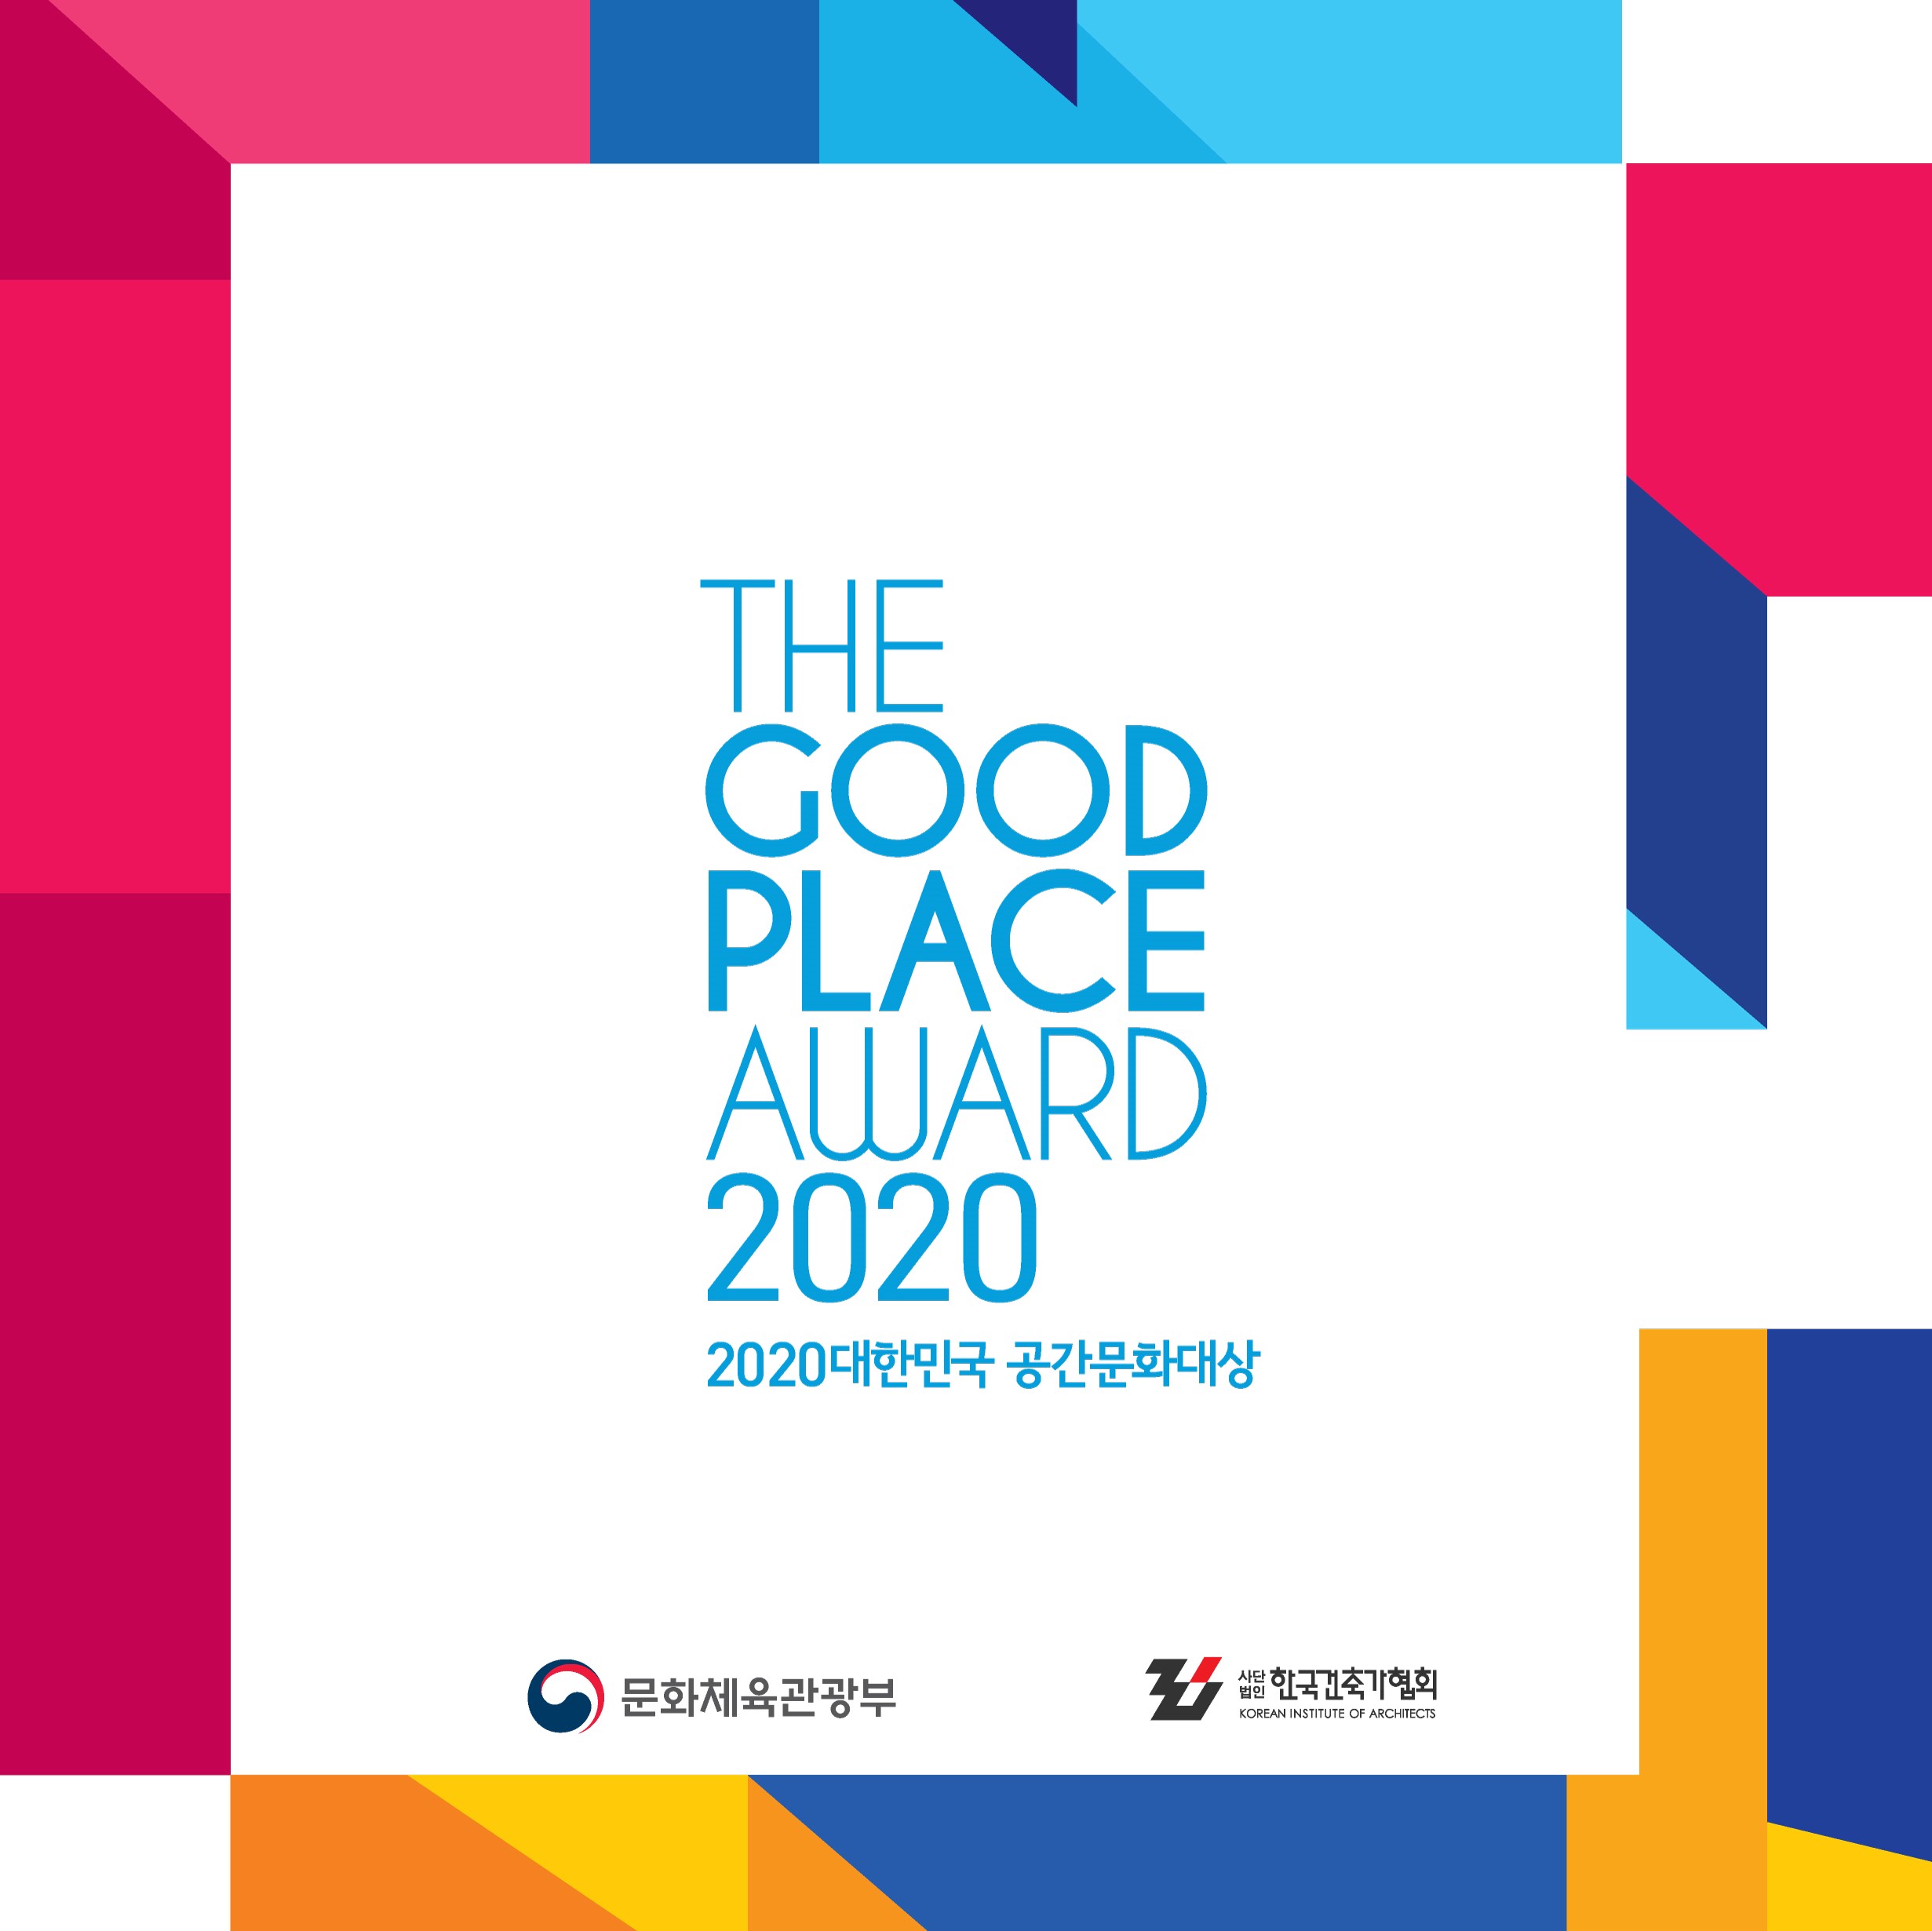 THE GOOD PLACE AWARD 2020 2020 대한민국 공간문화대상 문화체육관광부 한국건축가협회